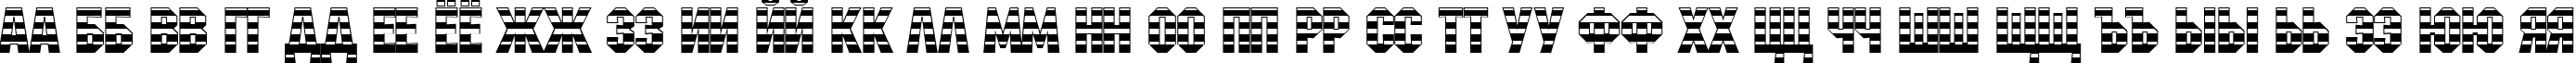 Пример написания русского алфавита шрифтом a_MachinaNovaGrd